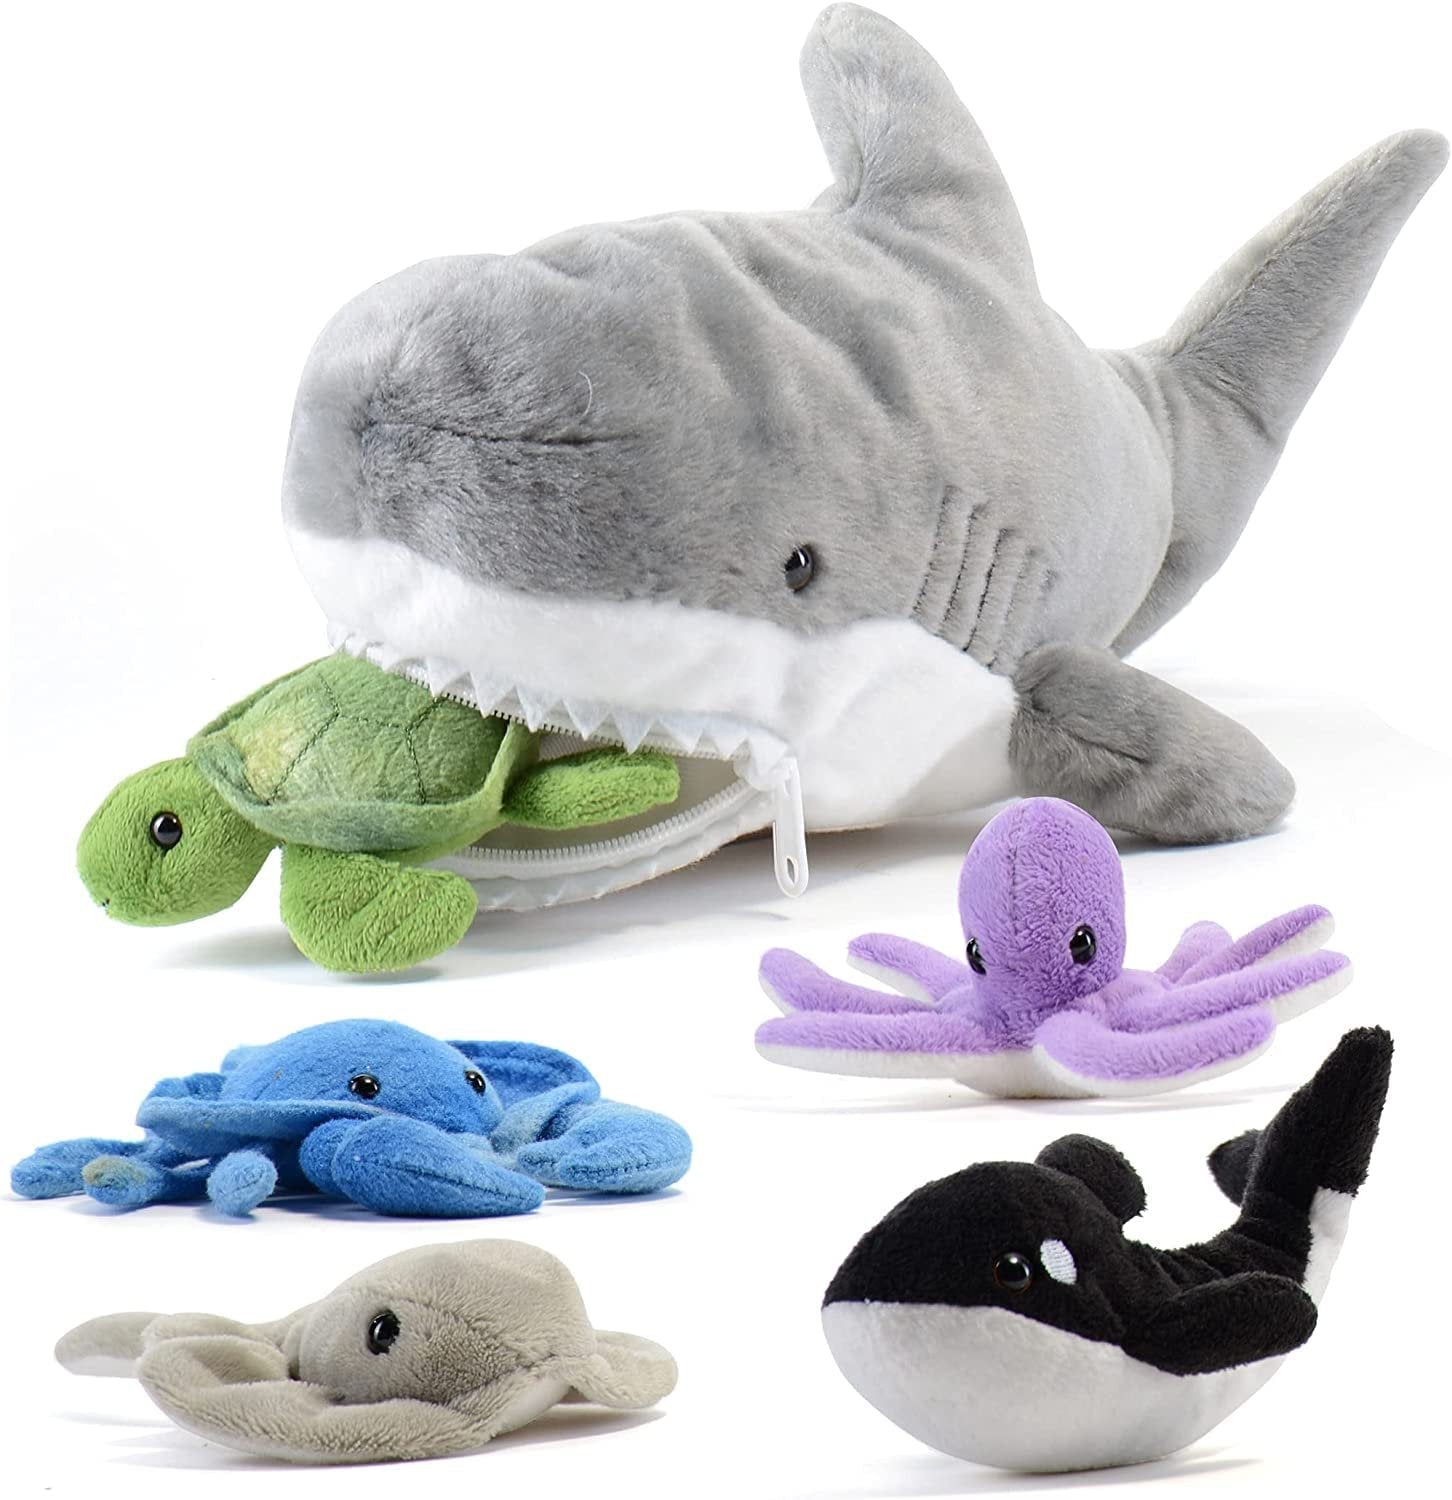 PREXTEX Plush Toy Shark Stuffed Animal with 5 Stuffed Sea Animals - Turtle, Whale, Octopus, Stingray, Crab Plush- Shark Plush Toys for Kids 3-5 - Giant Stuffed Animals Toy - Gift for Sea Animal Lovers